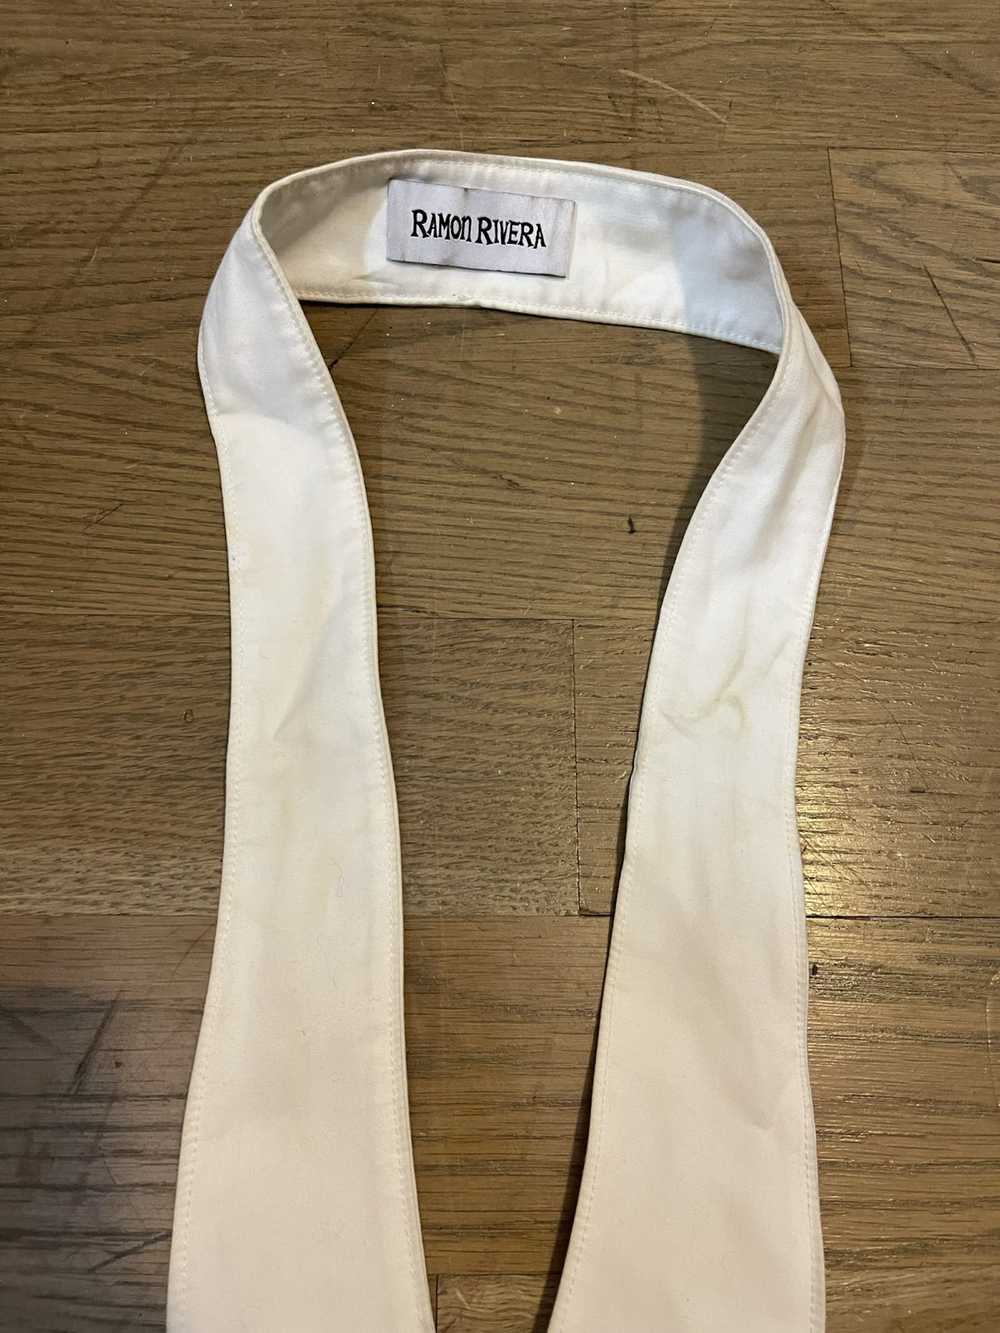 Brand Ramona Rivera white scarf tie - image 2